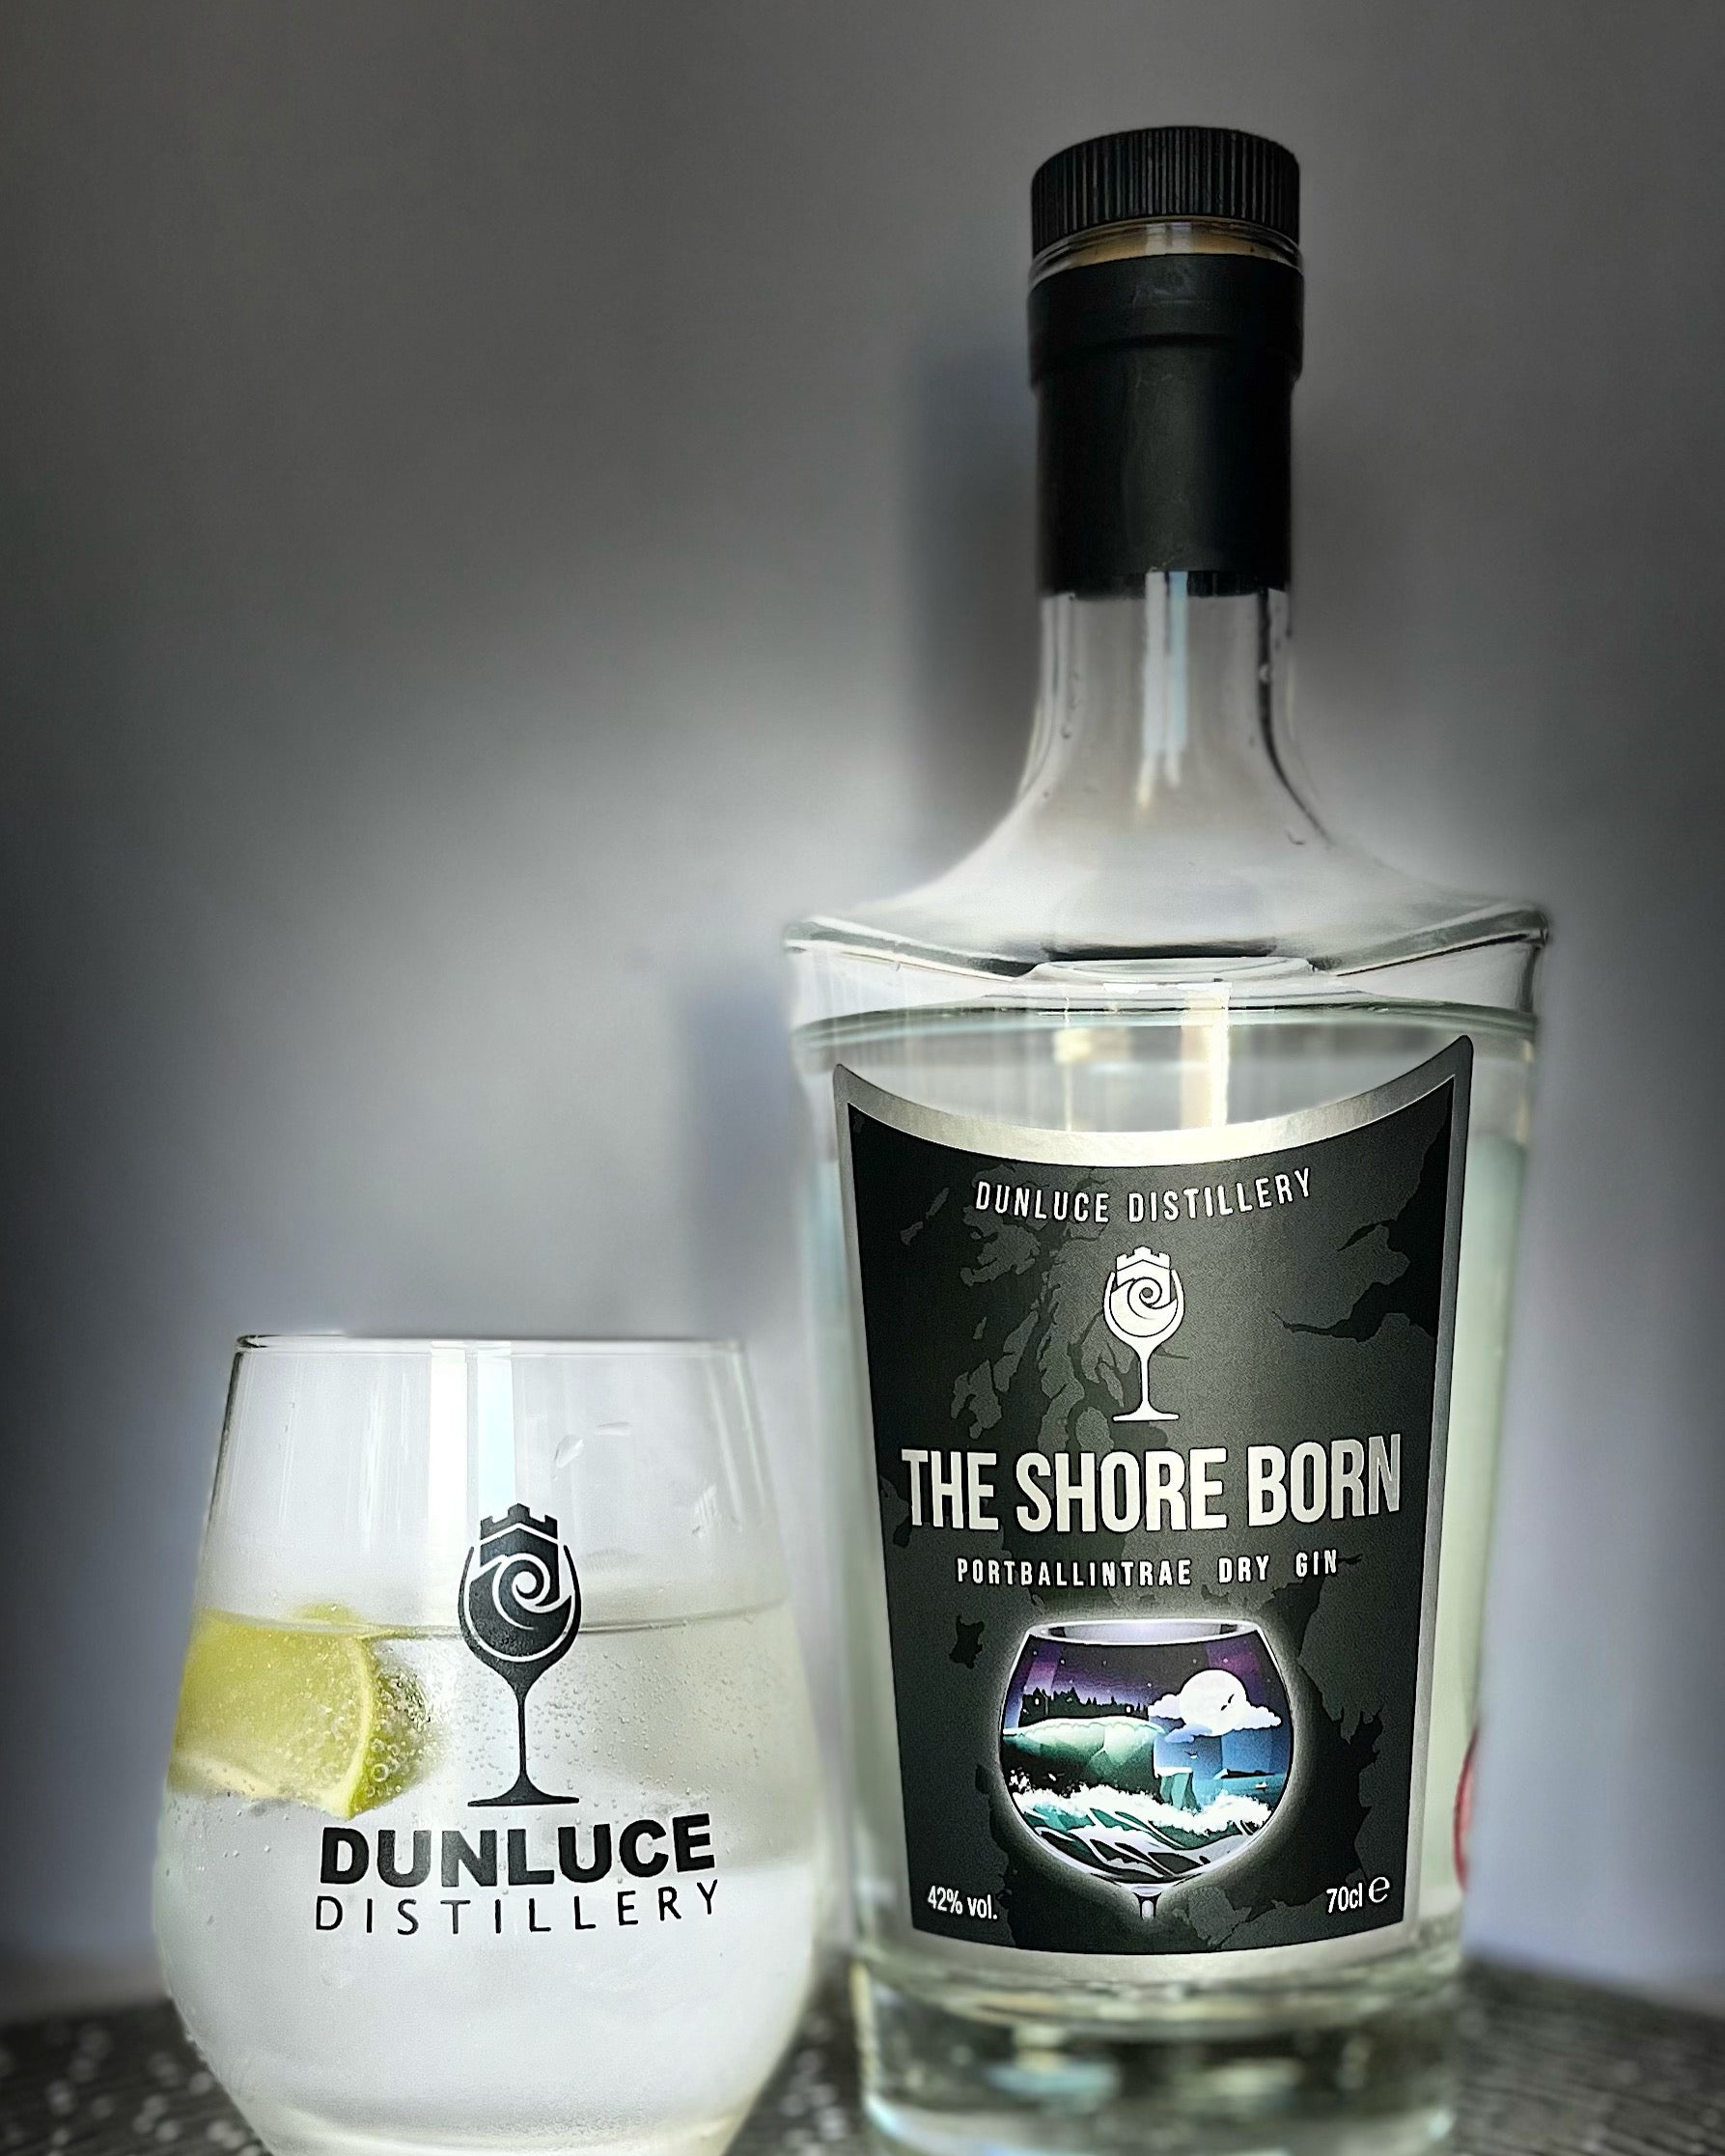 The Shore Born Portballintrae Dry Gin focus